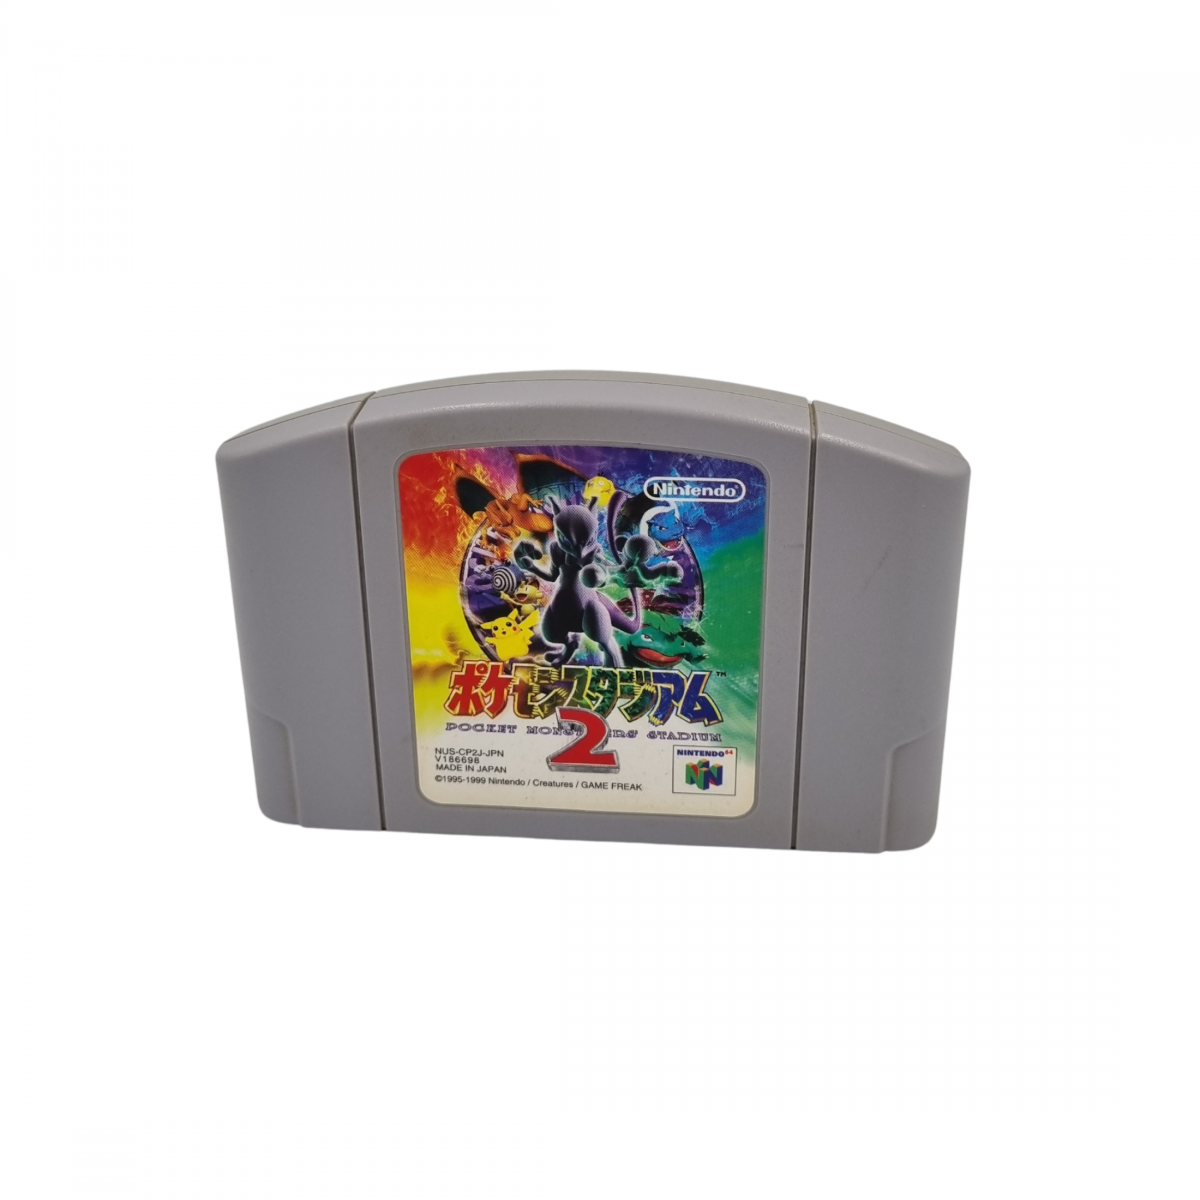 Pokemon Stadium 2 NTSC-J na Nintendo 64 - front carta